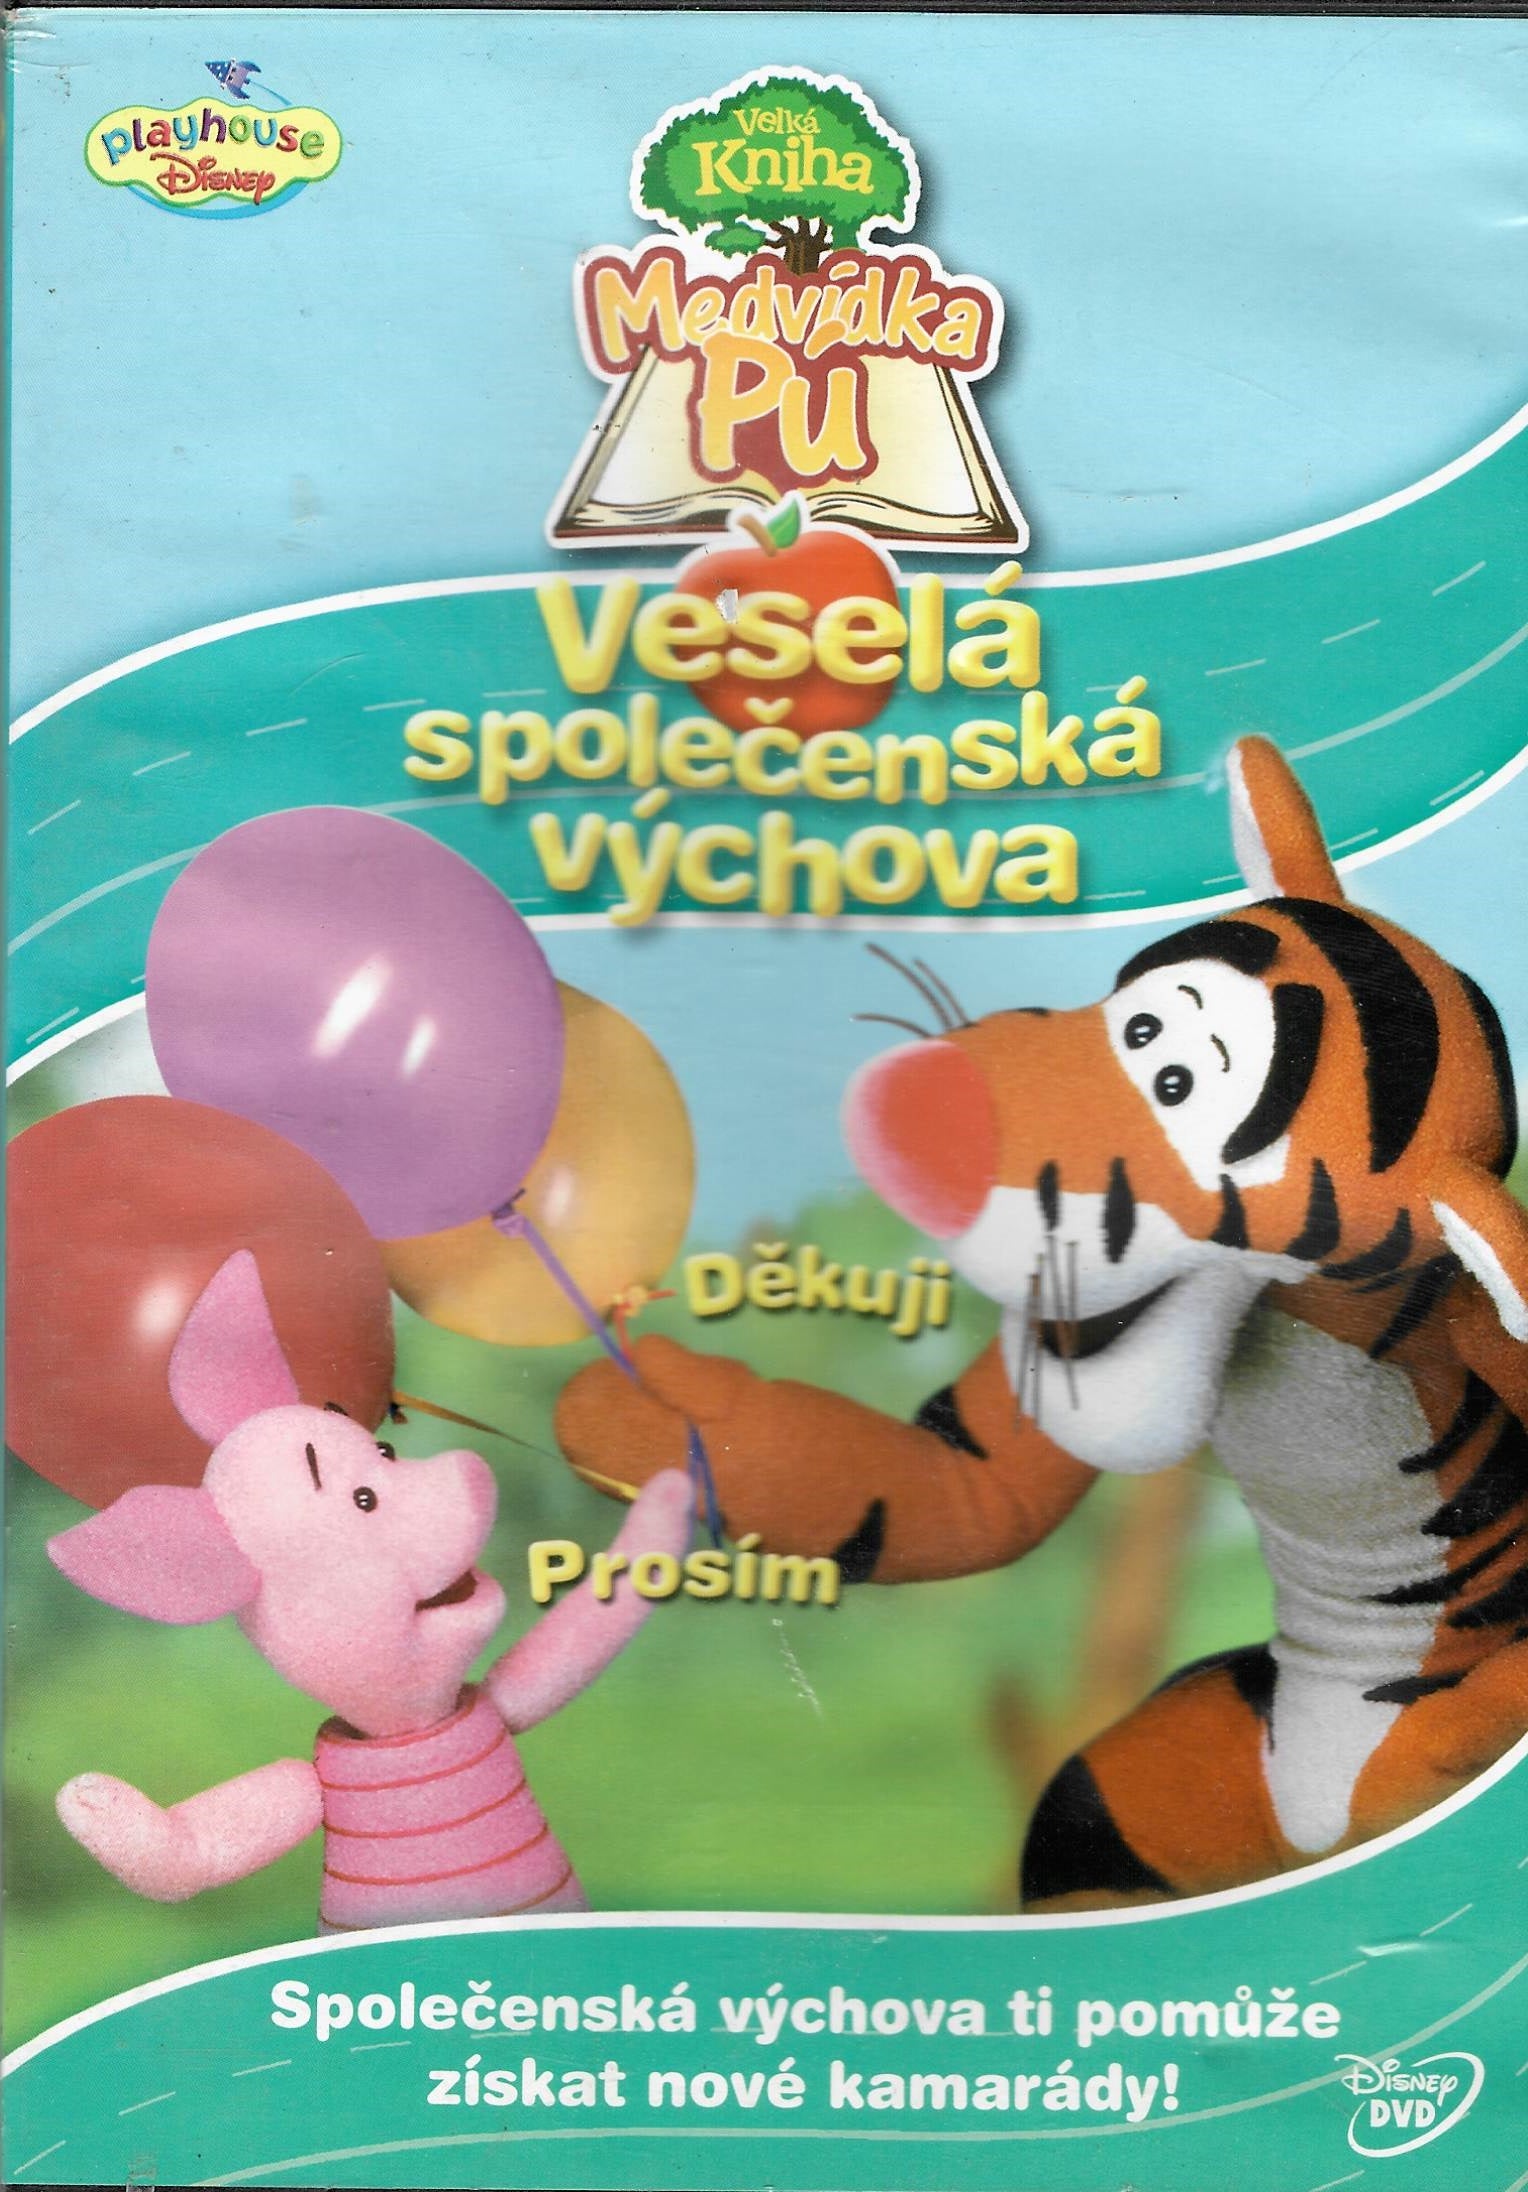 Medvidek Pu: Vesela spolecenska vychova DVD / Book Of Pooh: Fun With Manieren